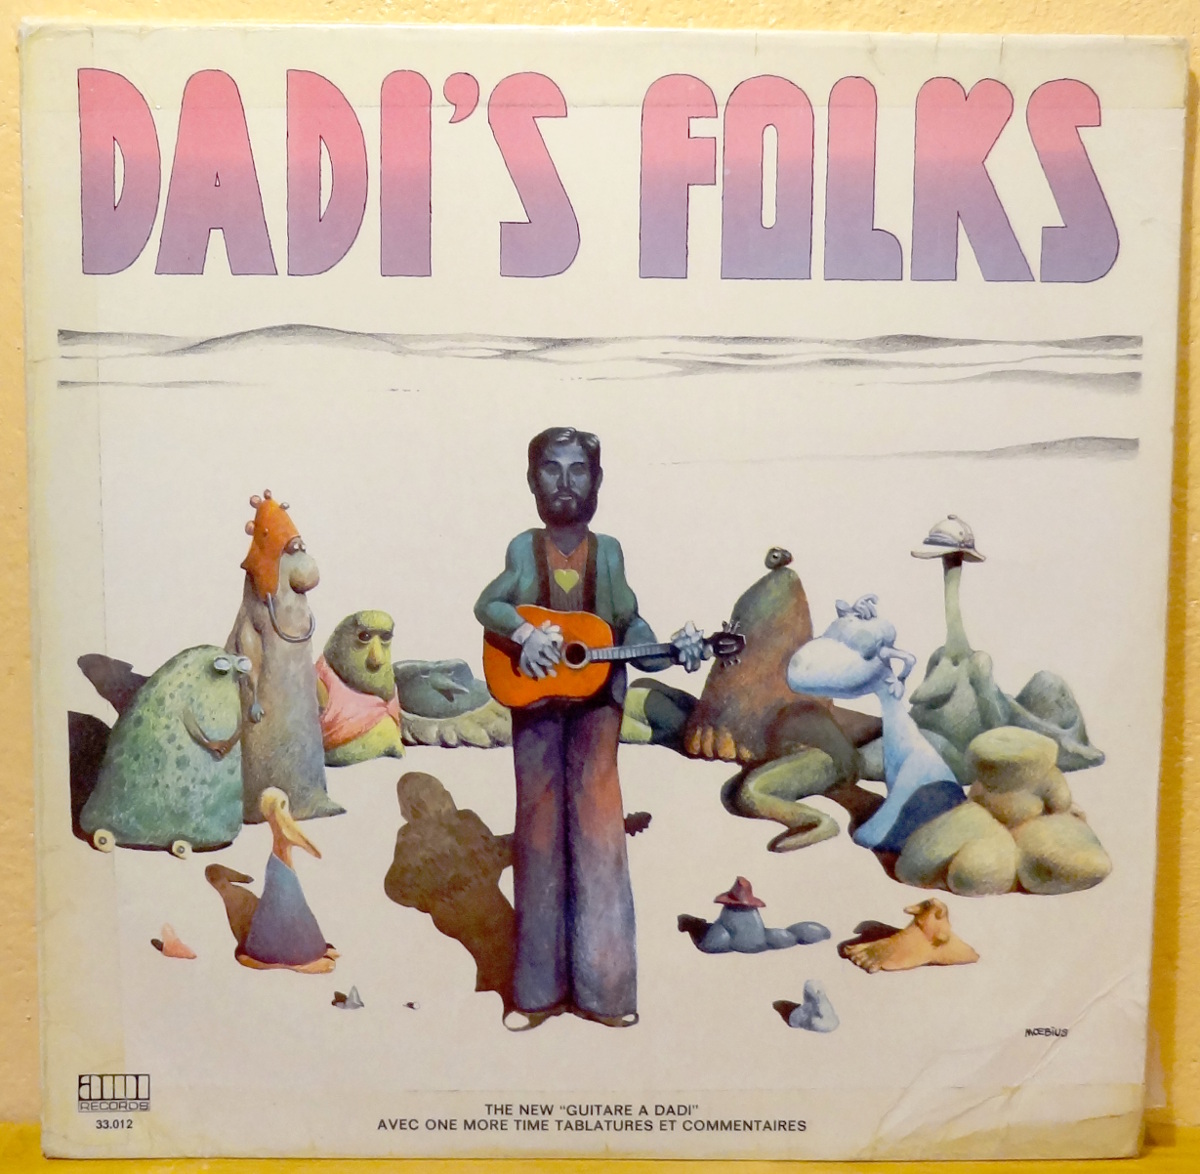 33T Dadi-s-folks - Moebius - 1973 -1.jpg